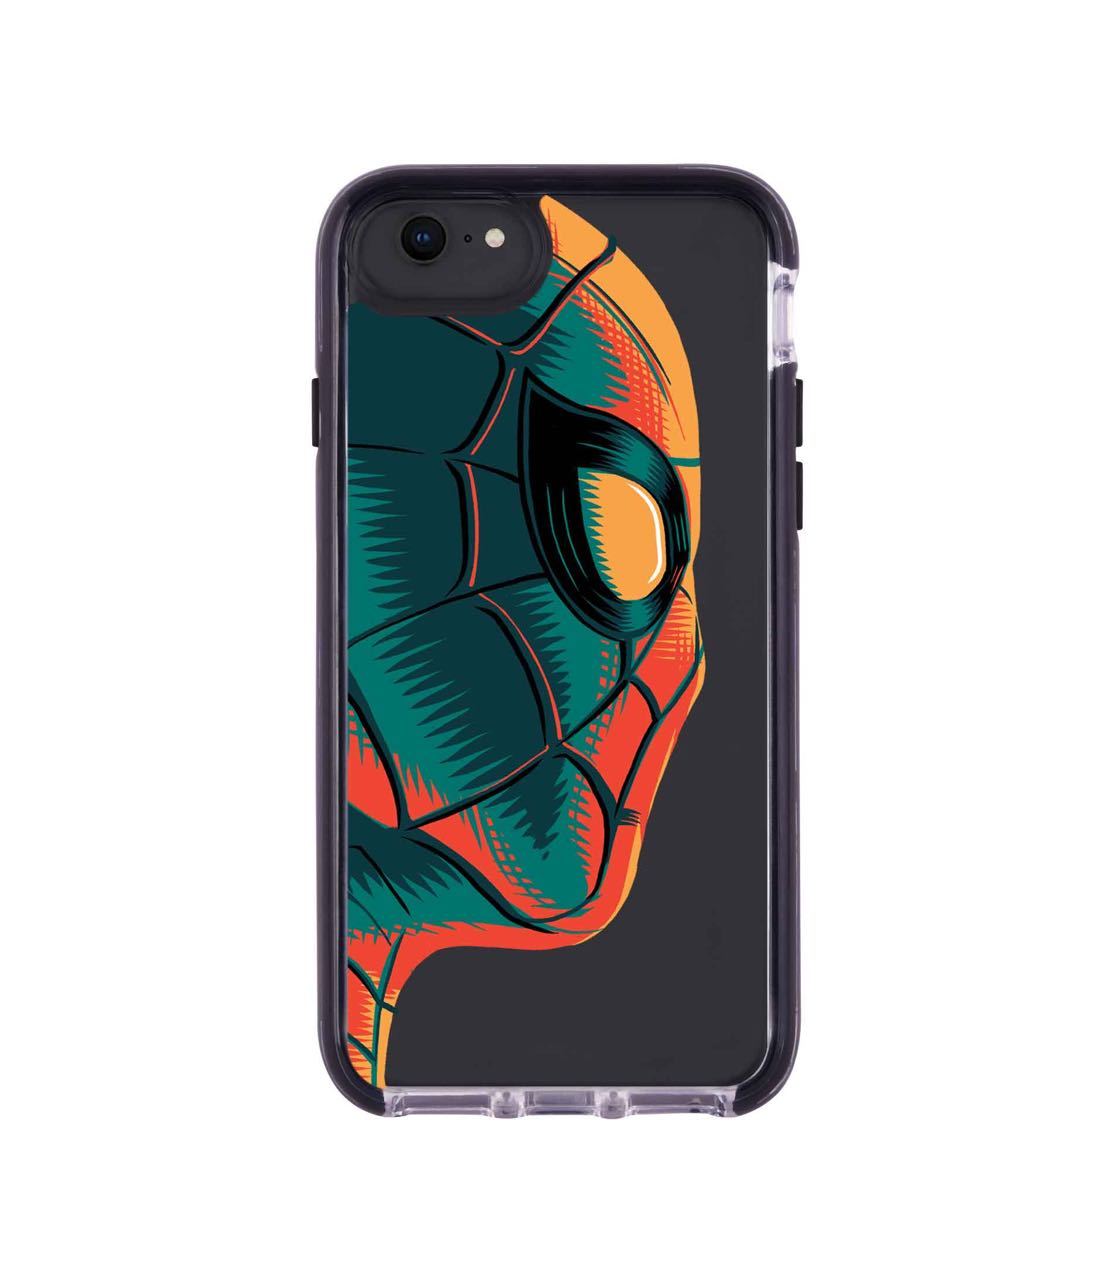 Illuminated Spiderman - Extreme Phone Case for iPhone 8